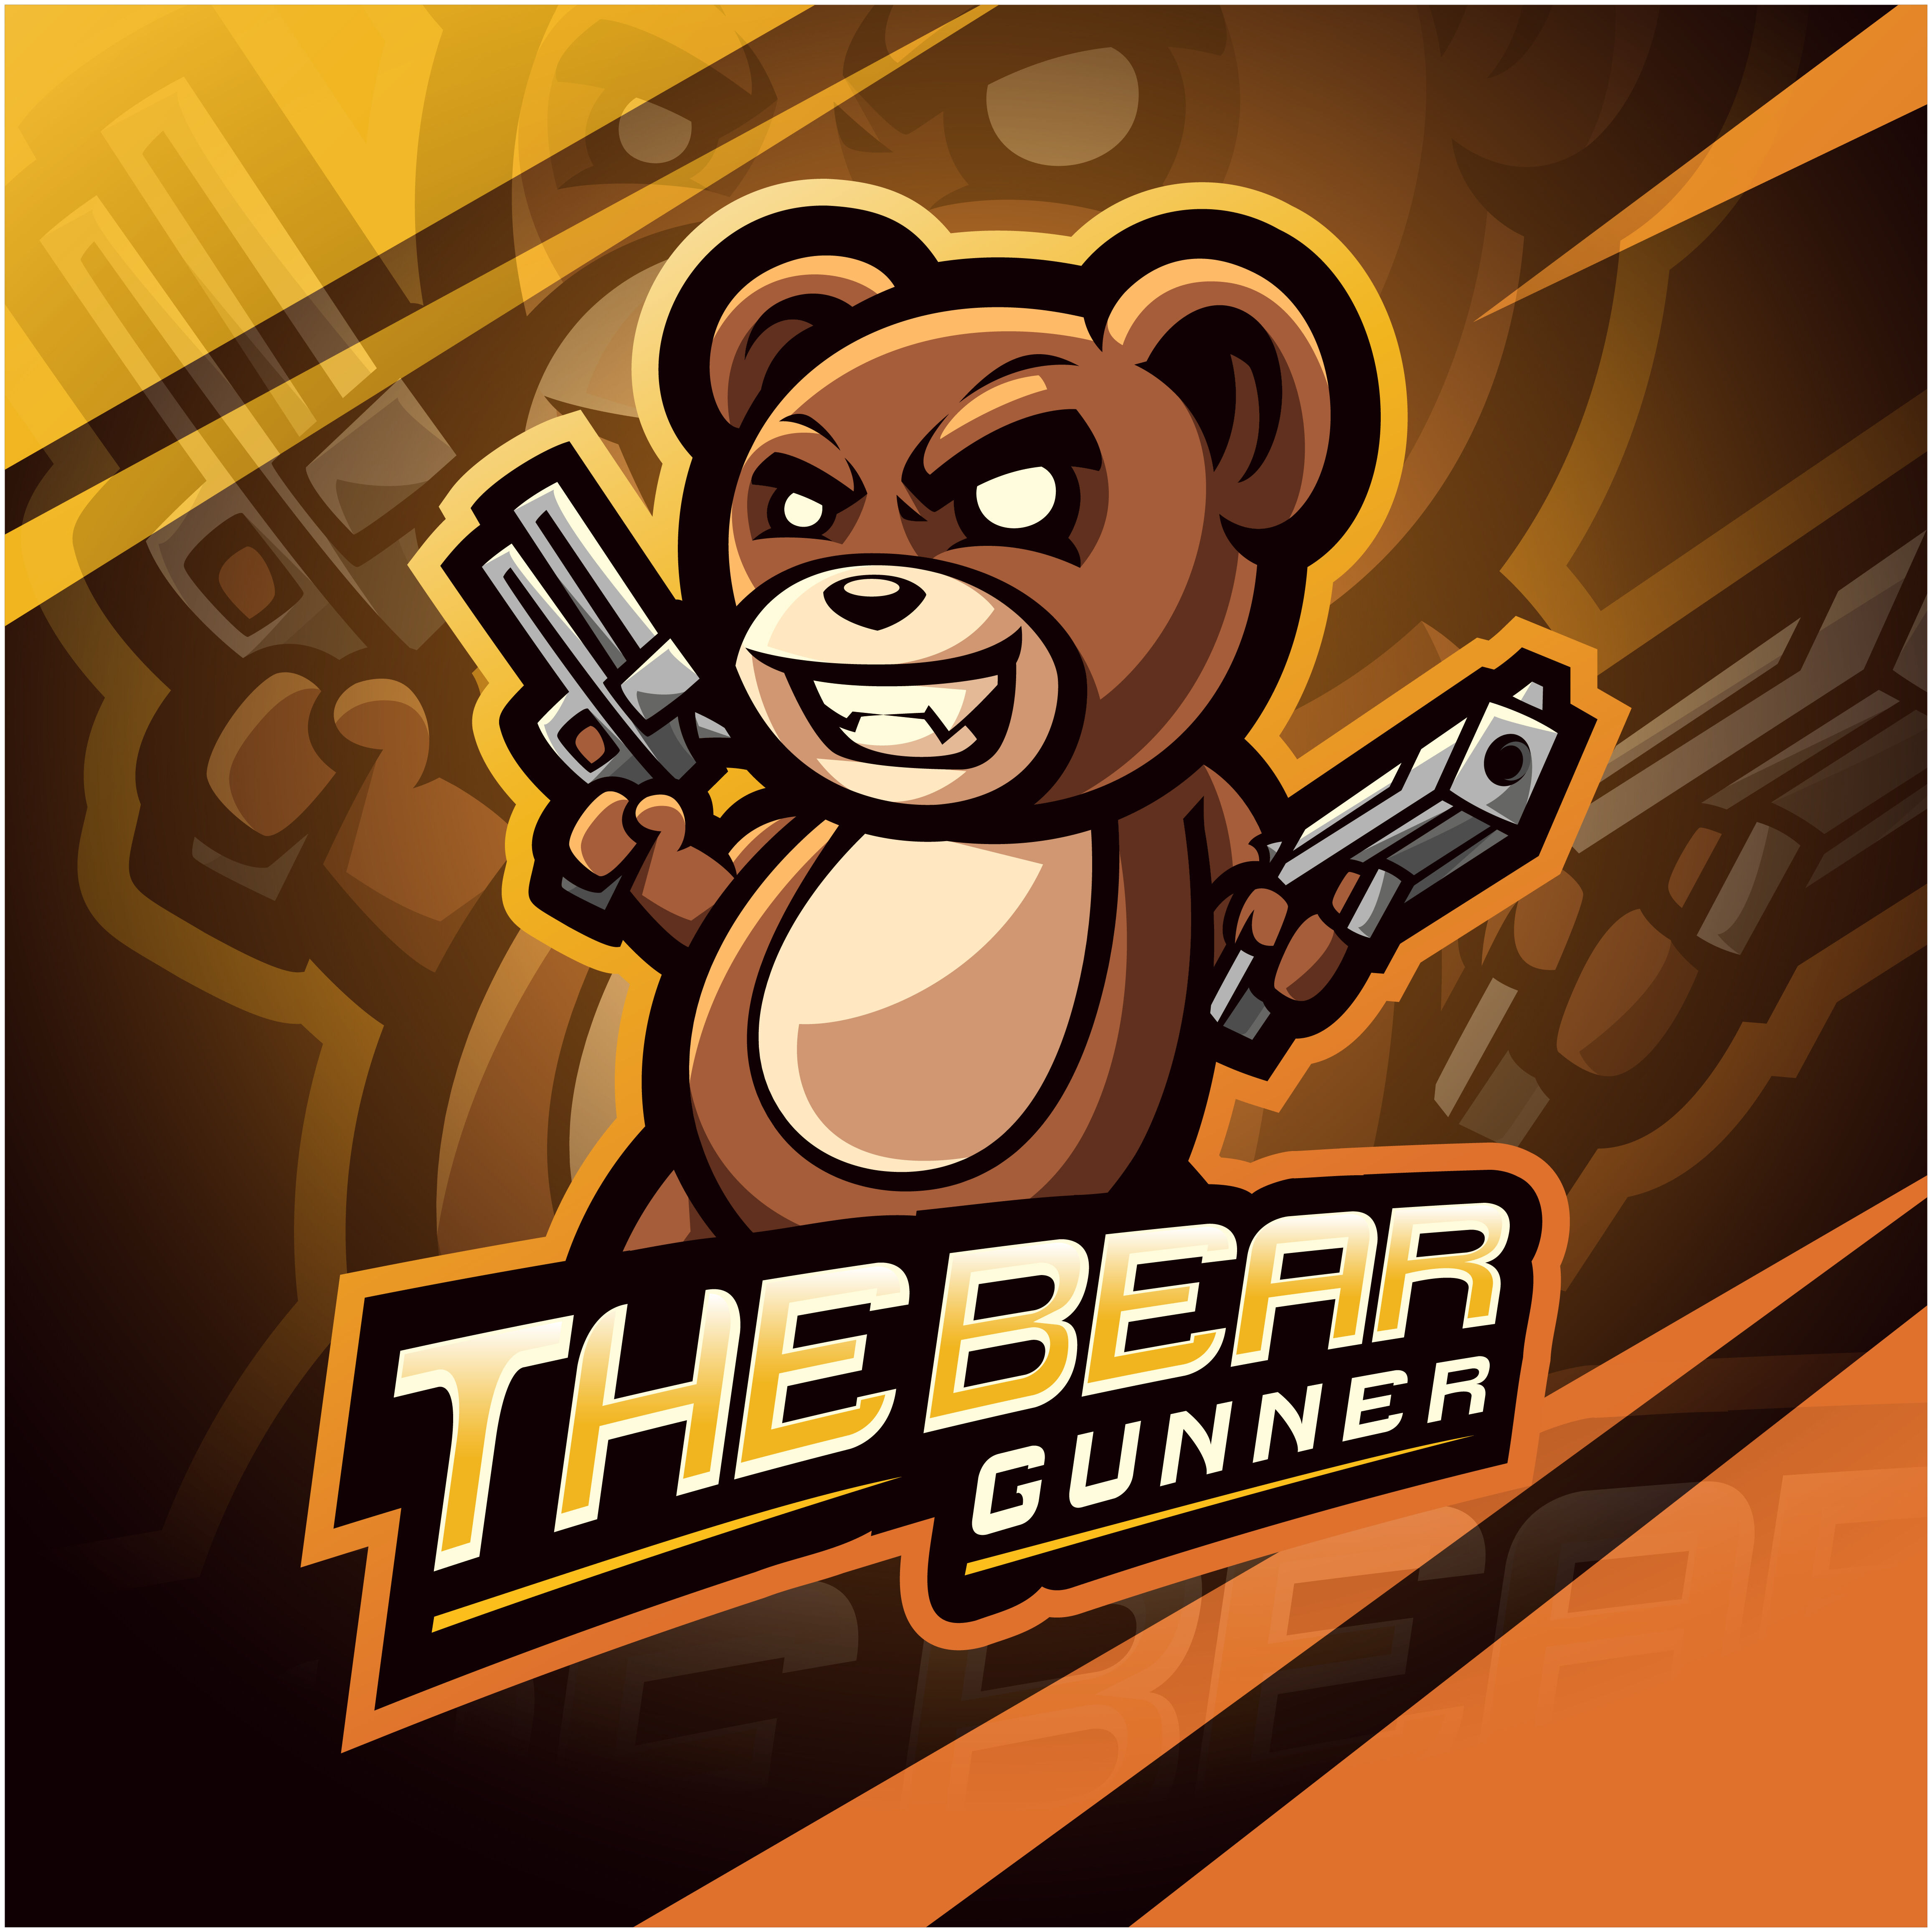 teddy bear logo